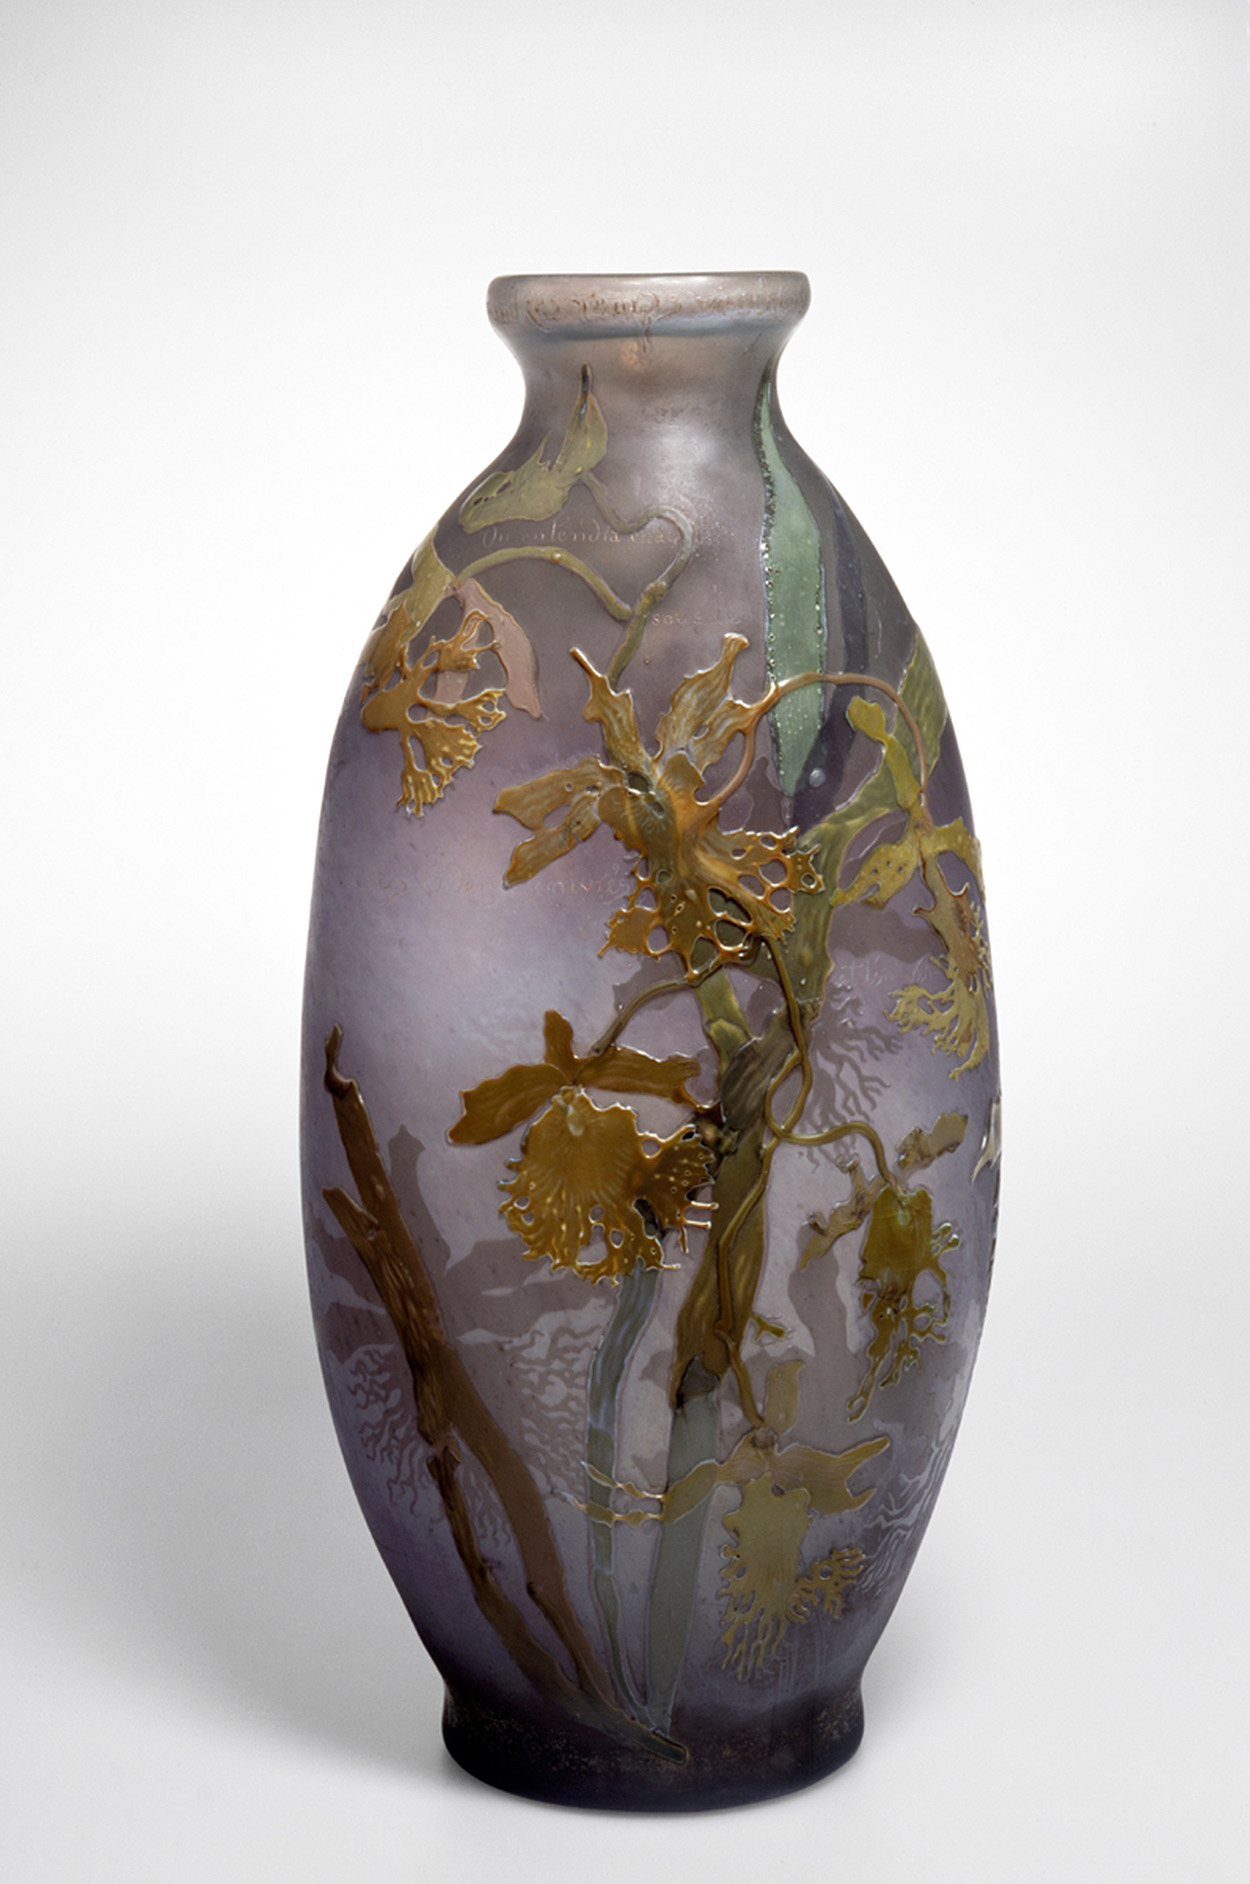 Vase by Emil Gallé - 1899 - 43,00 x 20,50 cm Europeana Foundation